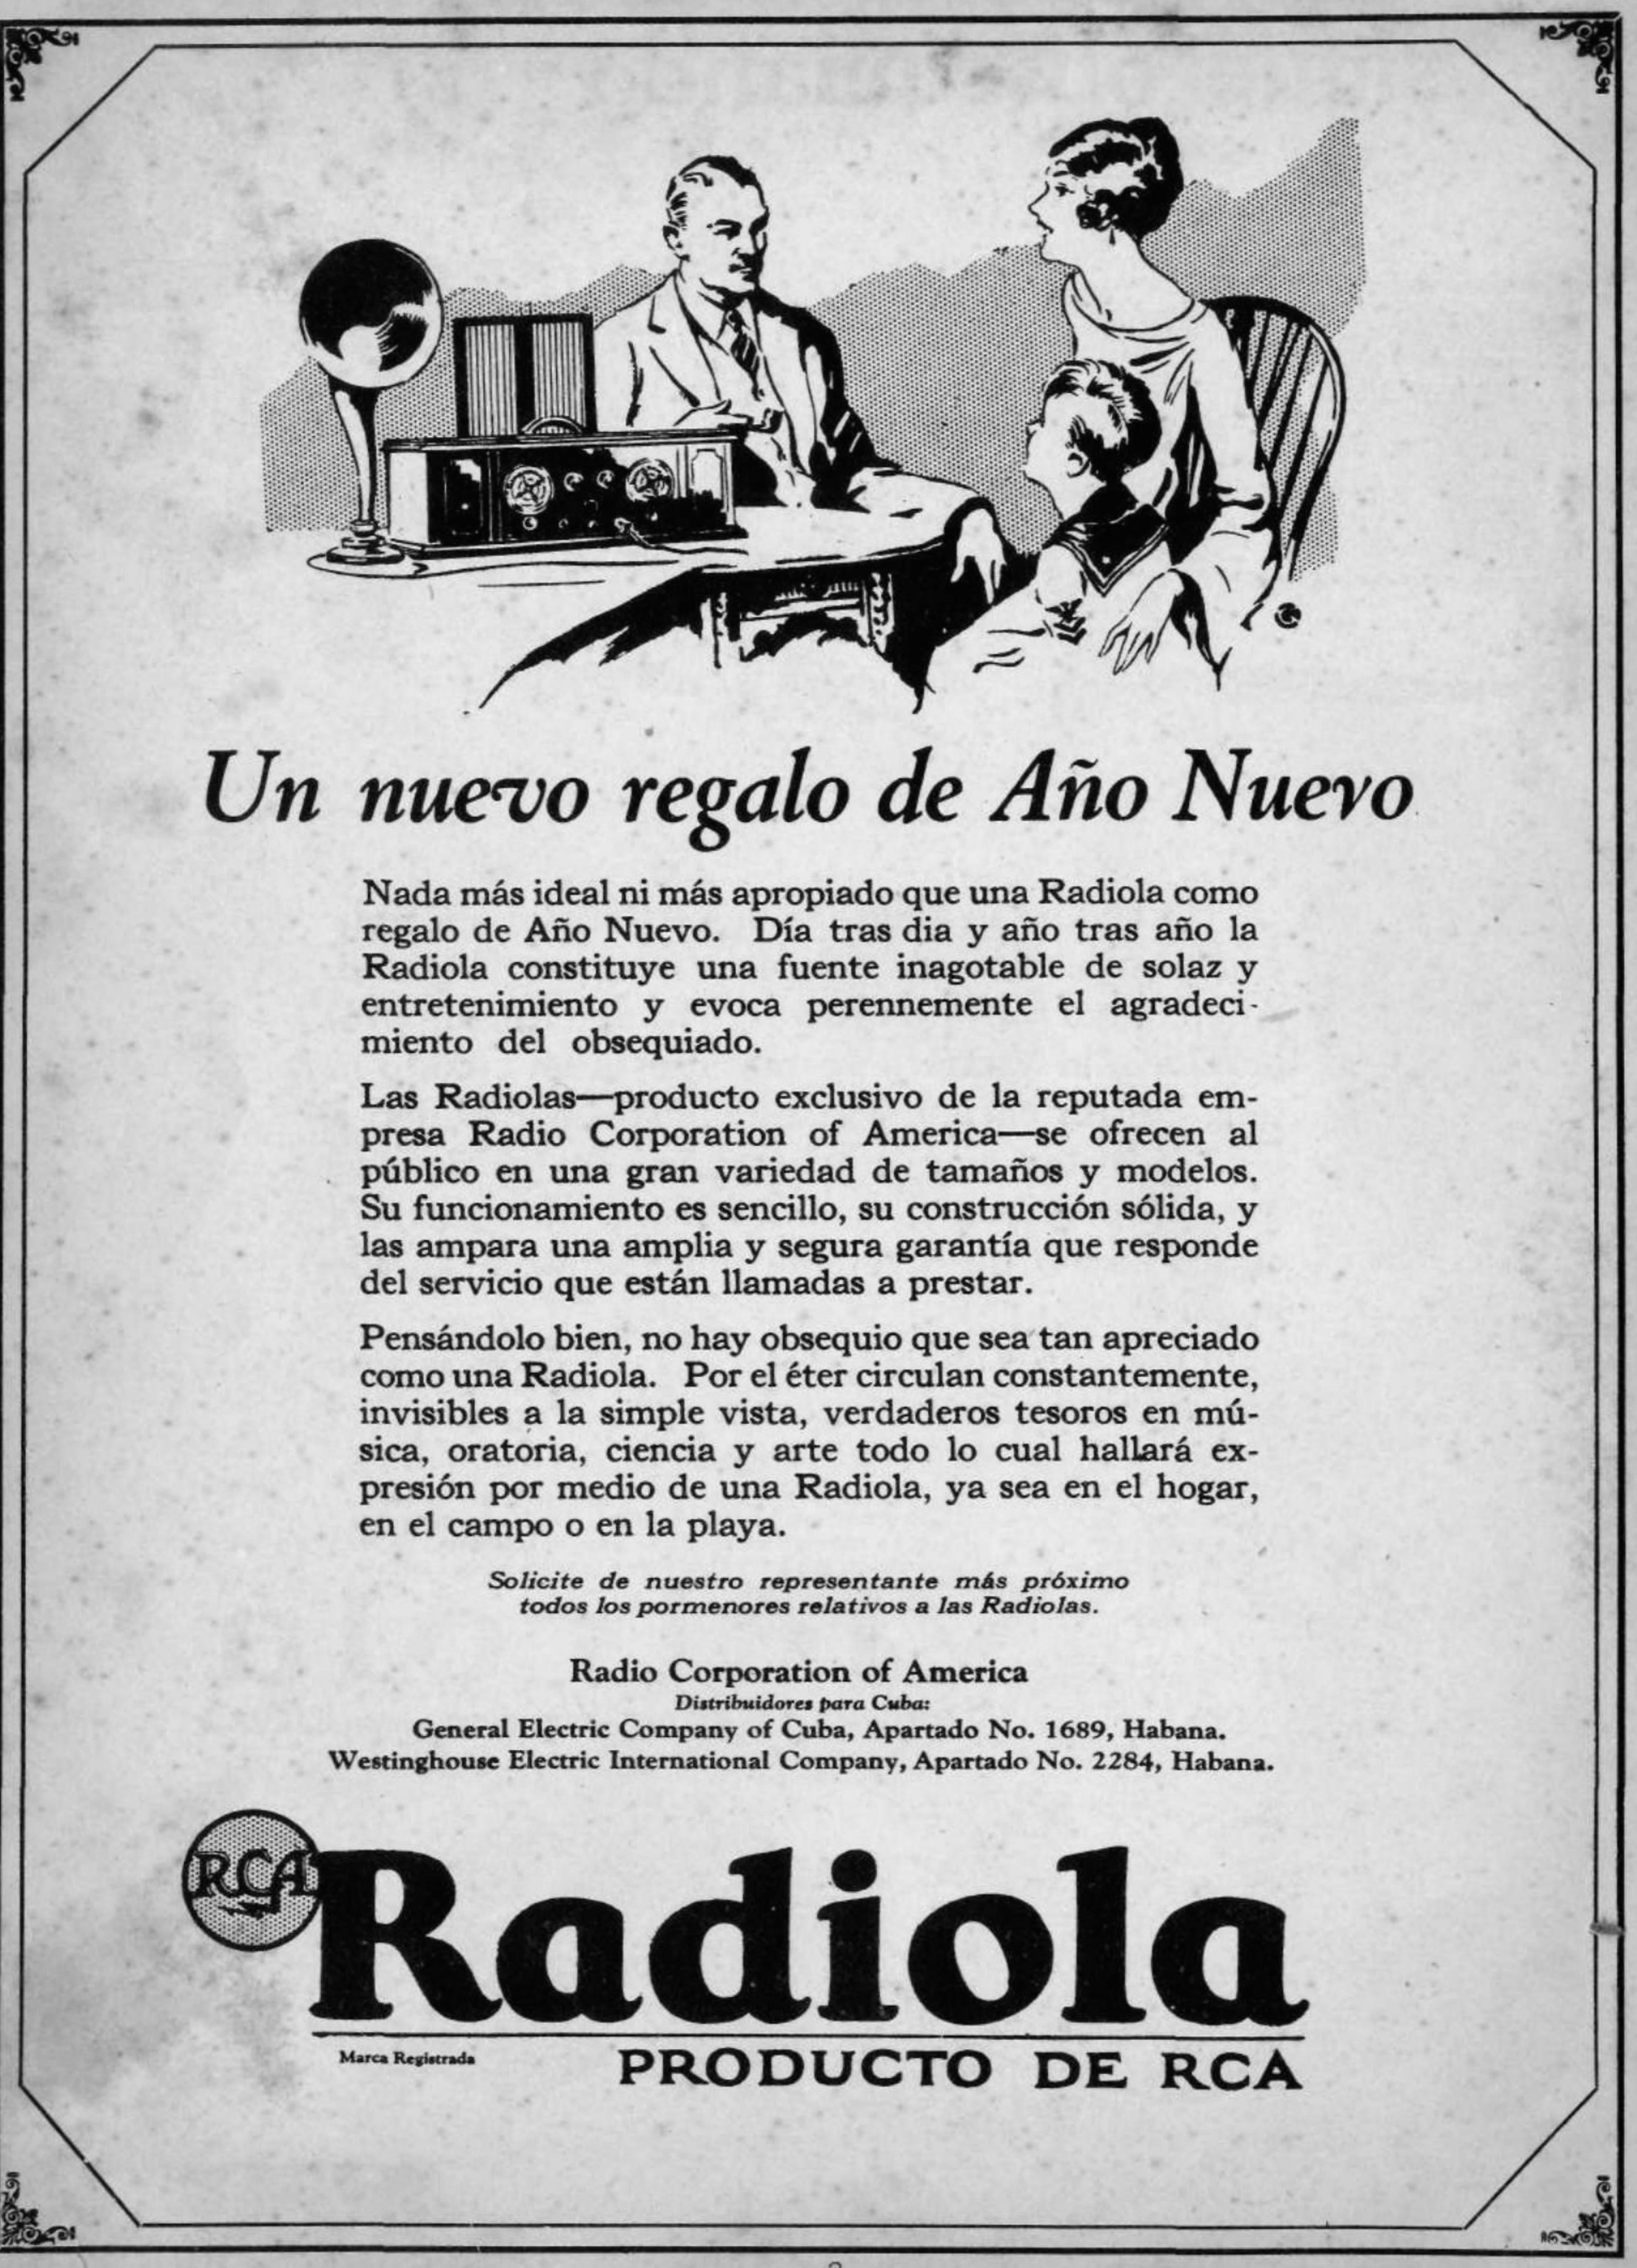 Radiola 1925 60.jpg